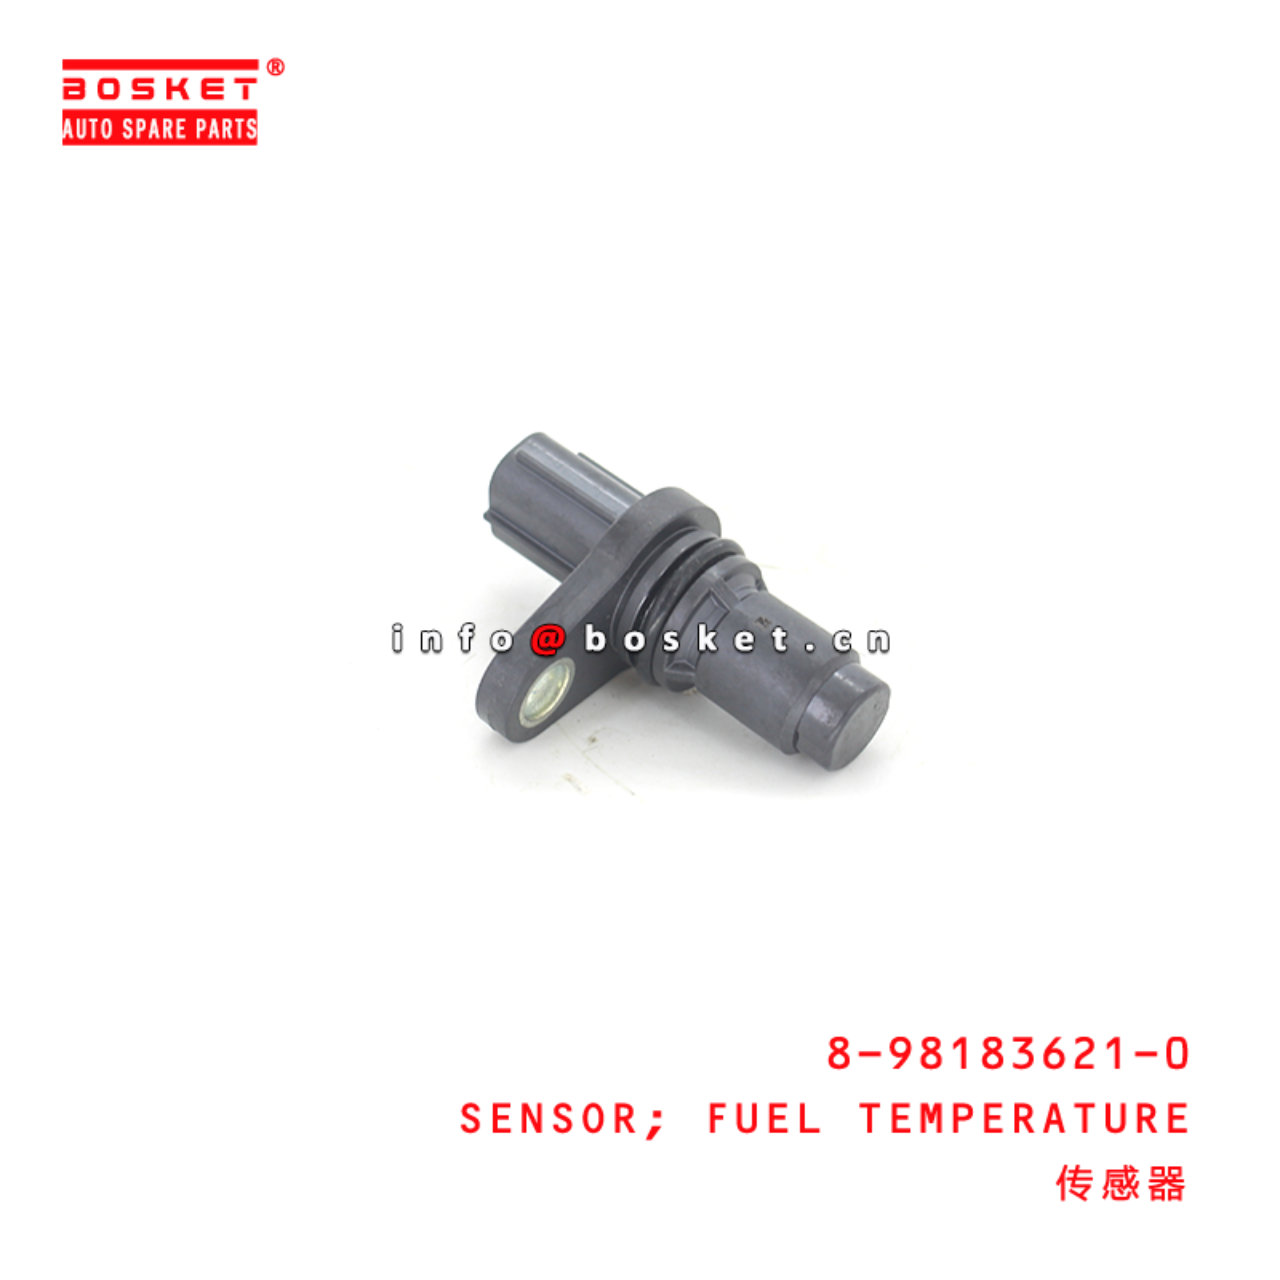 8-98183621-0 Fuel Temperature Sensor Suitable for ISUZU NPR 4JH1T 8981836210